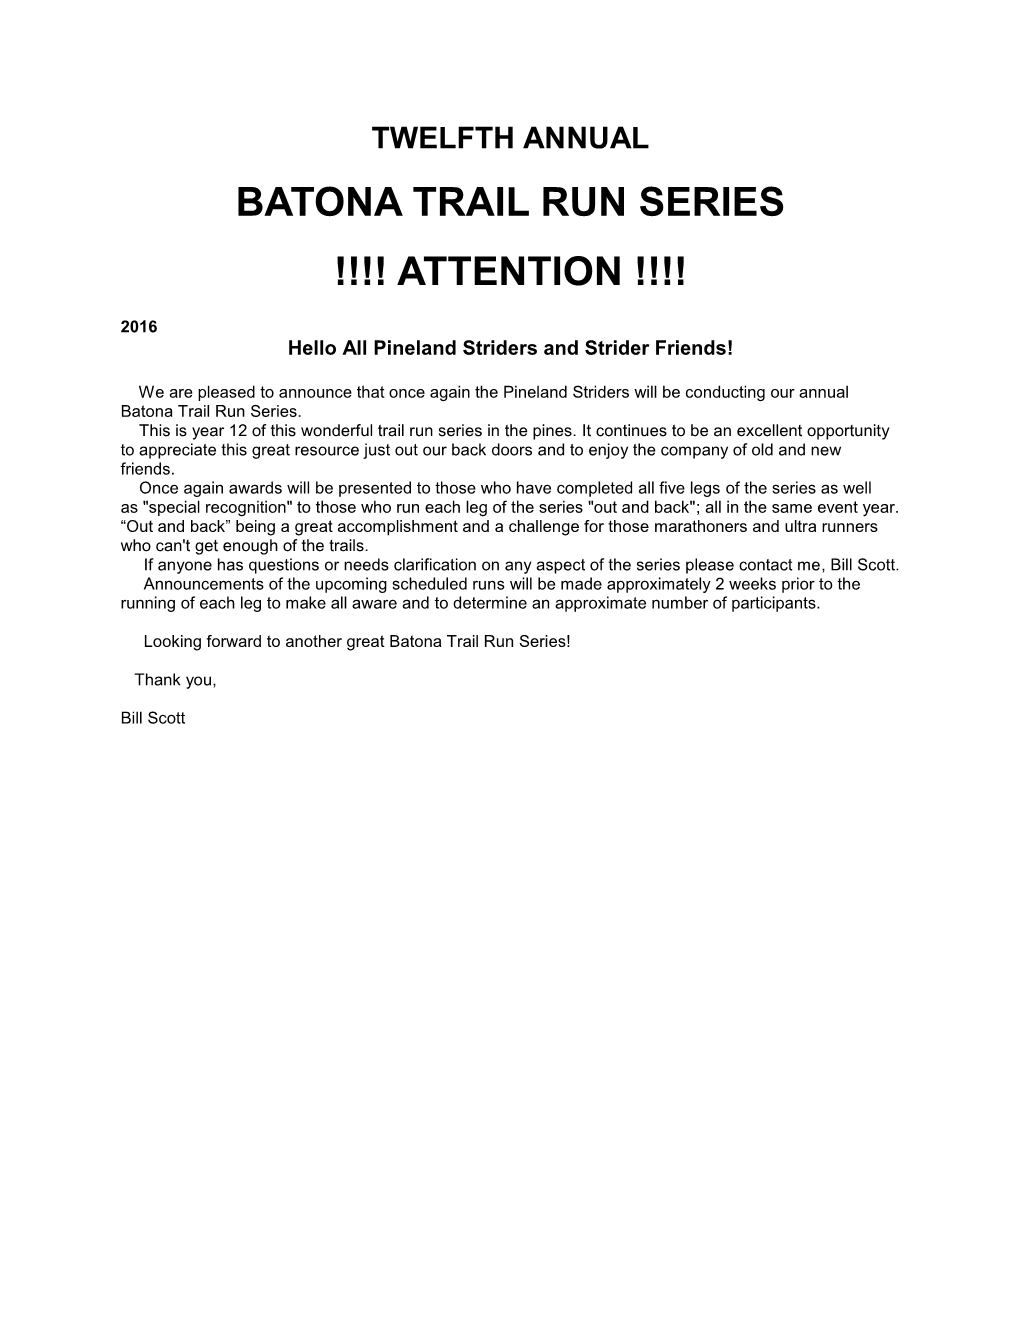 Batona Trail Run Series !!!! Attention !!!!